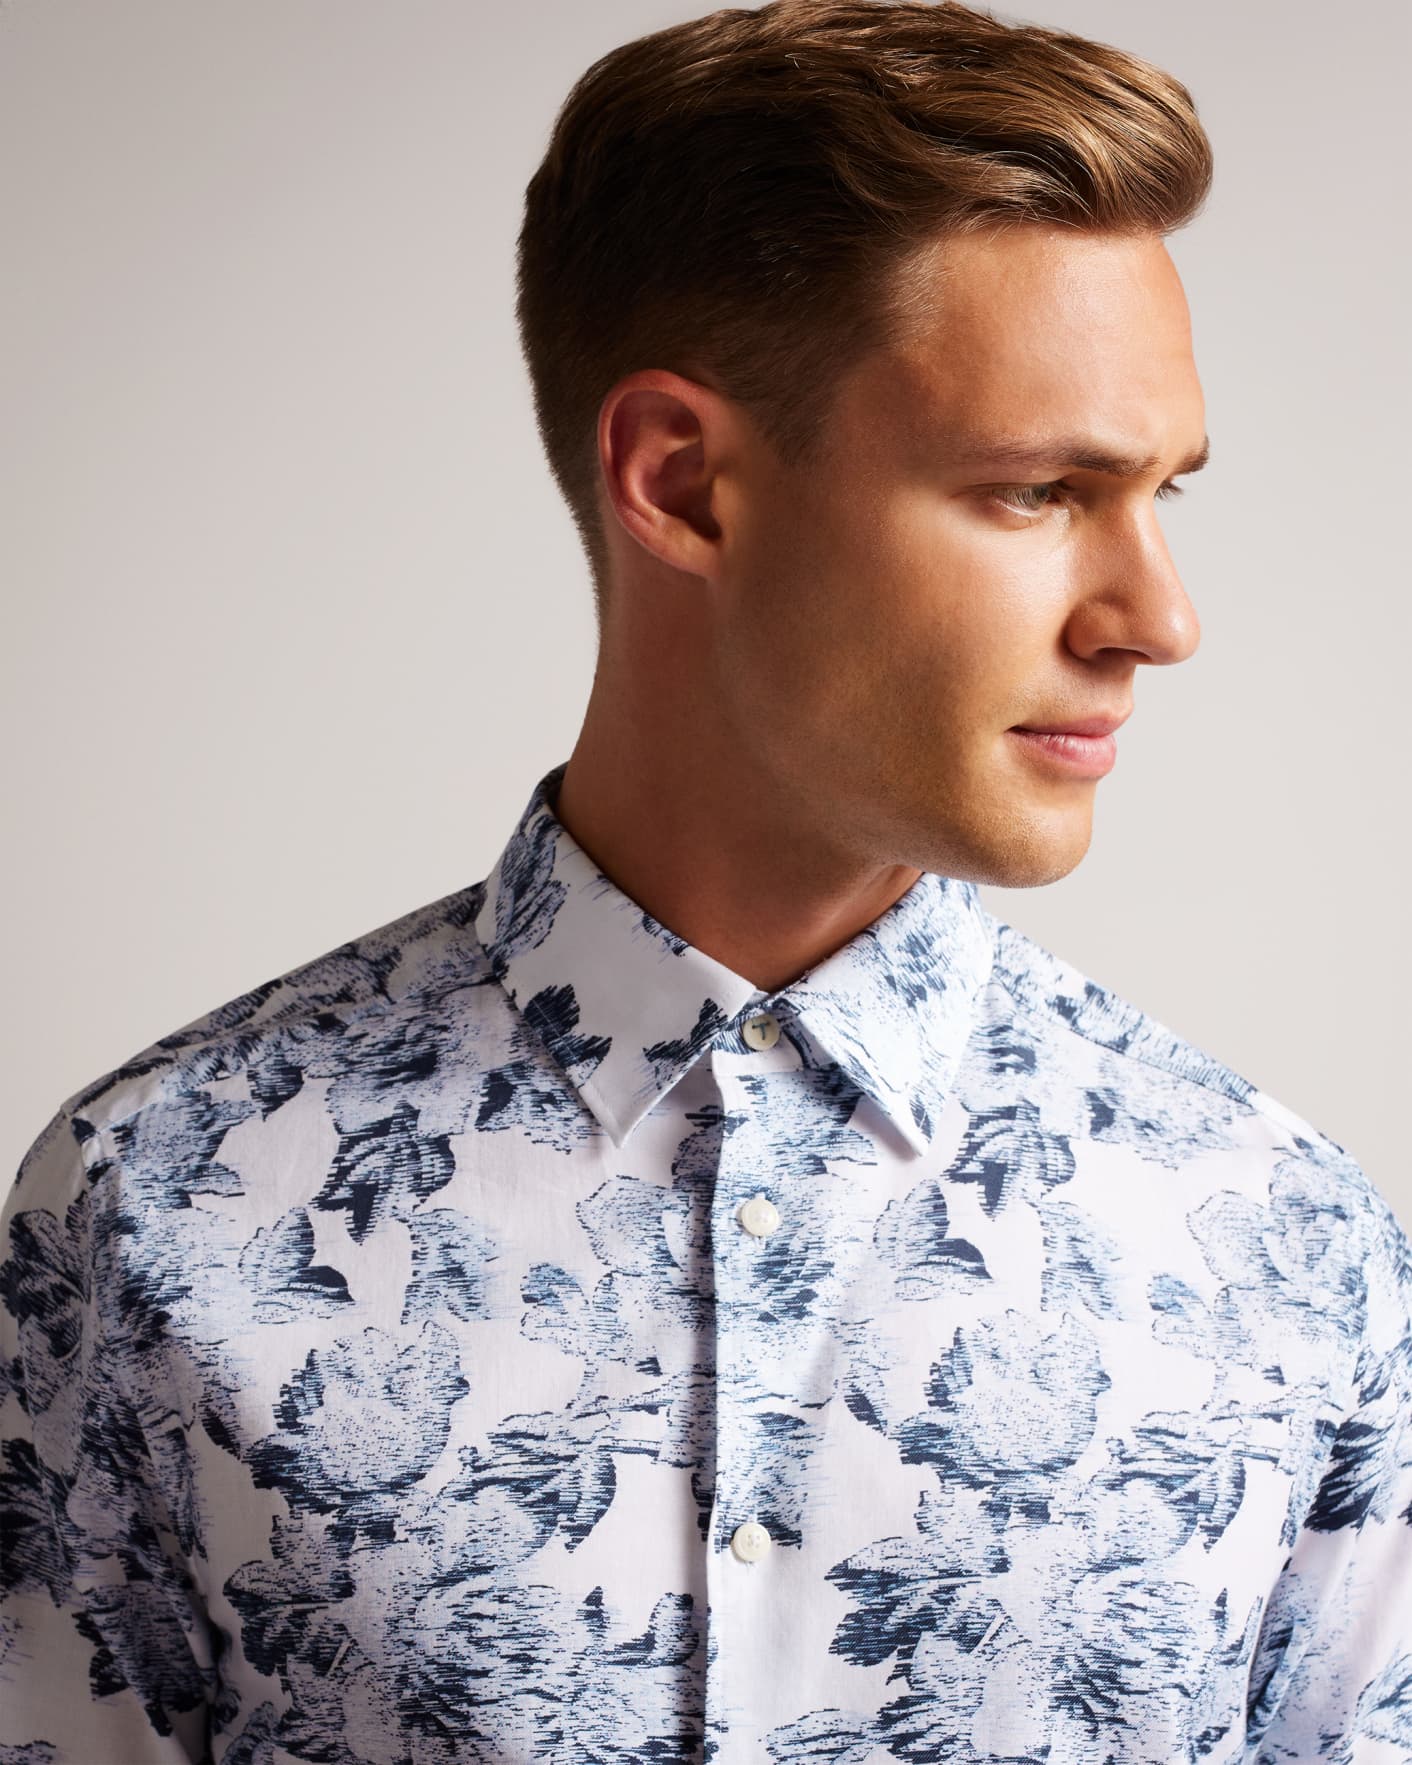 Men's floral shirt- Floral pattern men's shirt- Men's long sleeve floral  shirt